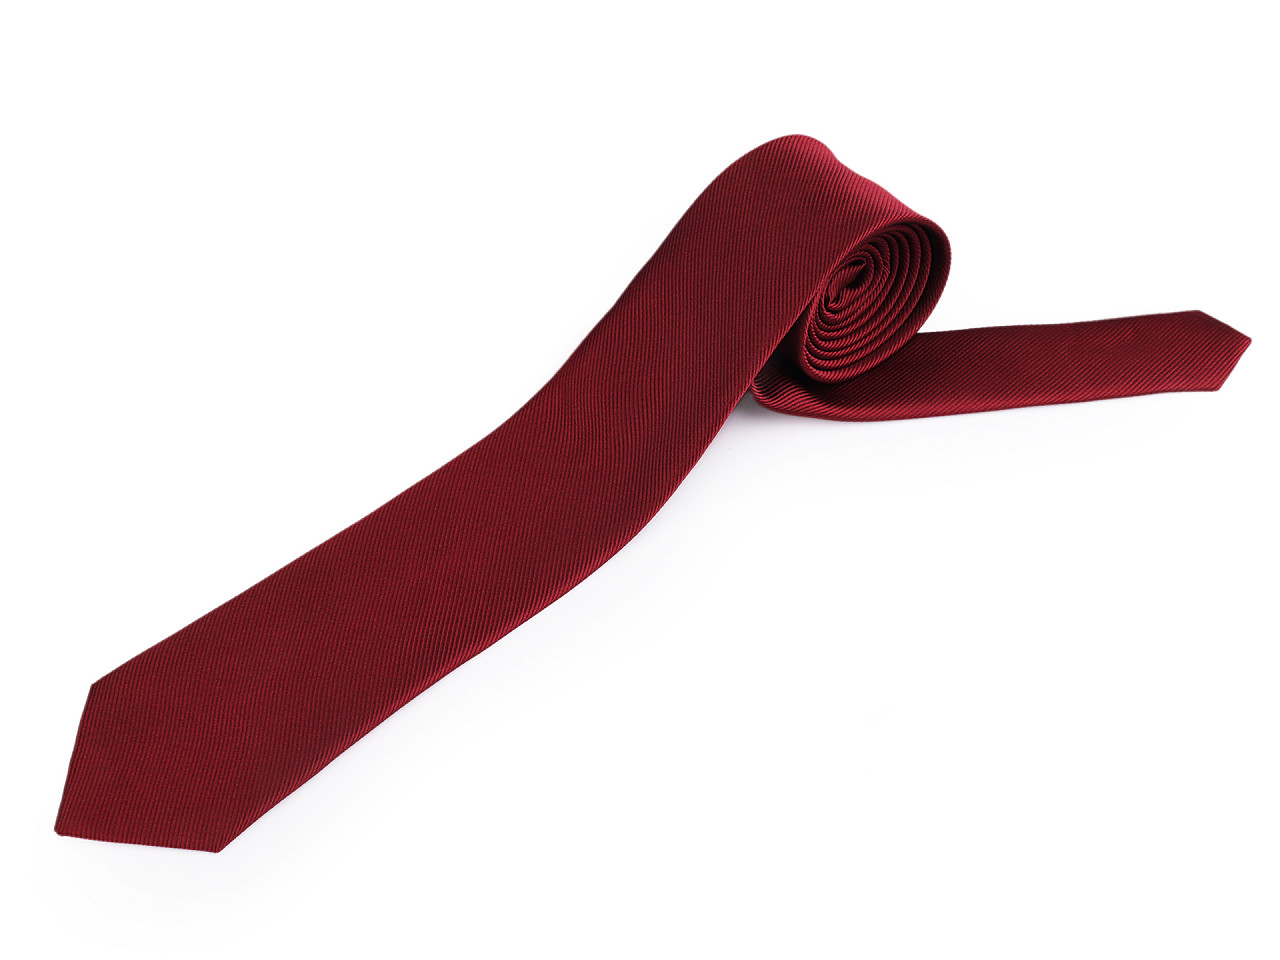 Mikrofaser-Krawatte einfarbig, bordeauxrot, 1 Stk.